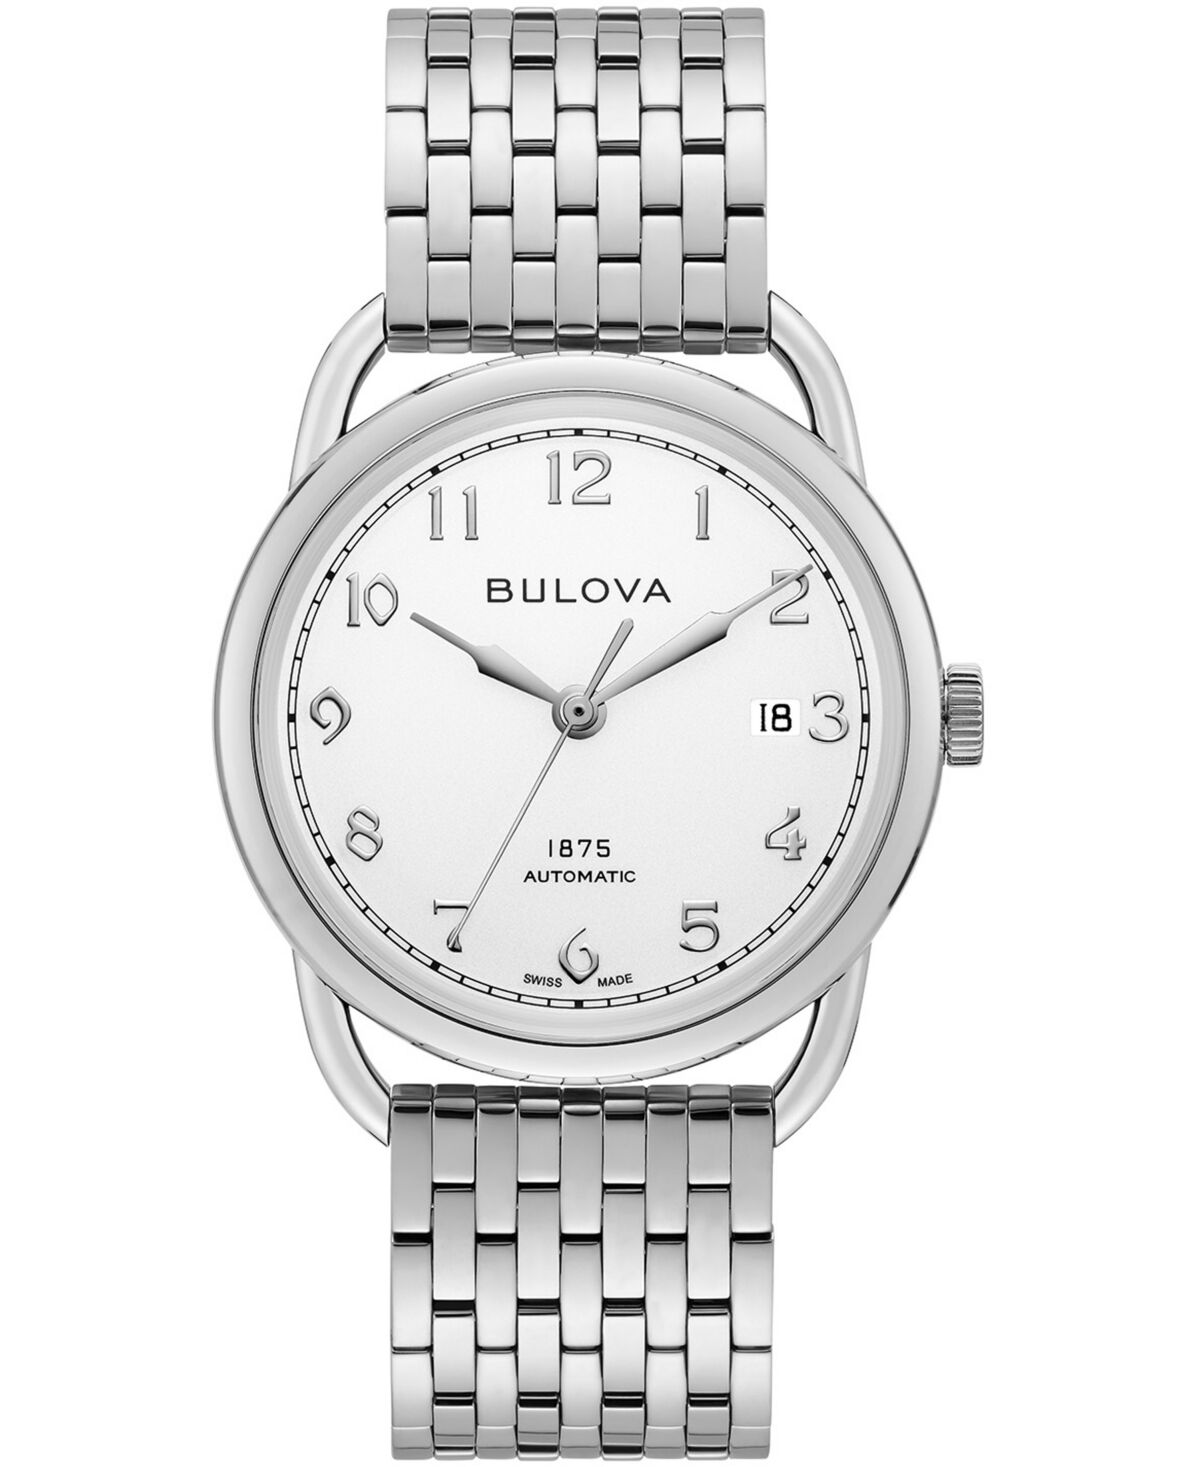 Bulova Limtied Edition Bulova Men's Swiss Automatic Joseph Bulova Stainless Steel Bracelet Watch 38.5mm - Silver